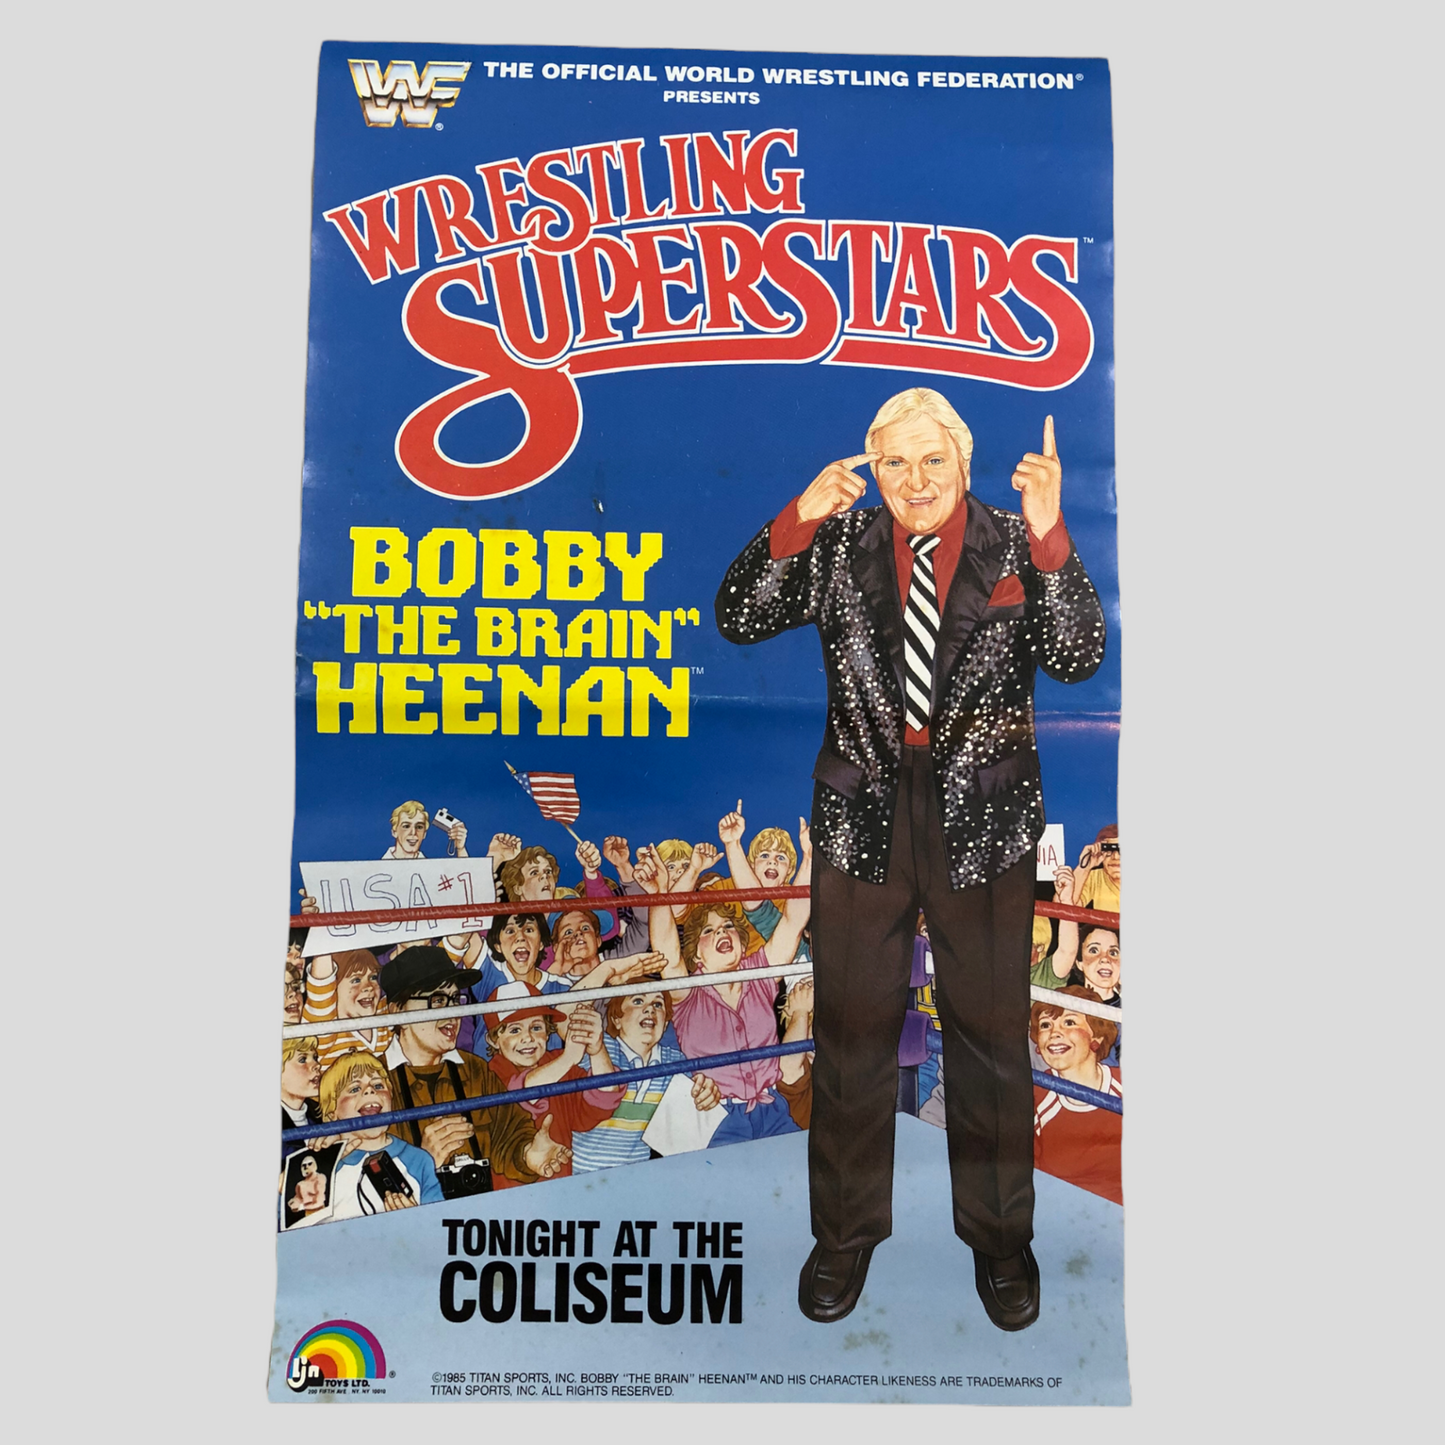 1986 WWF LJN Wrestling Superstars Series 3 Bobby "The Brain" Heenan [Without Scrolls on Shoulder]